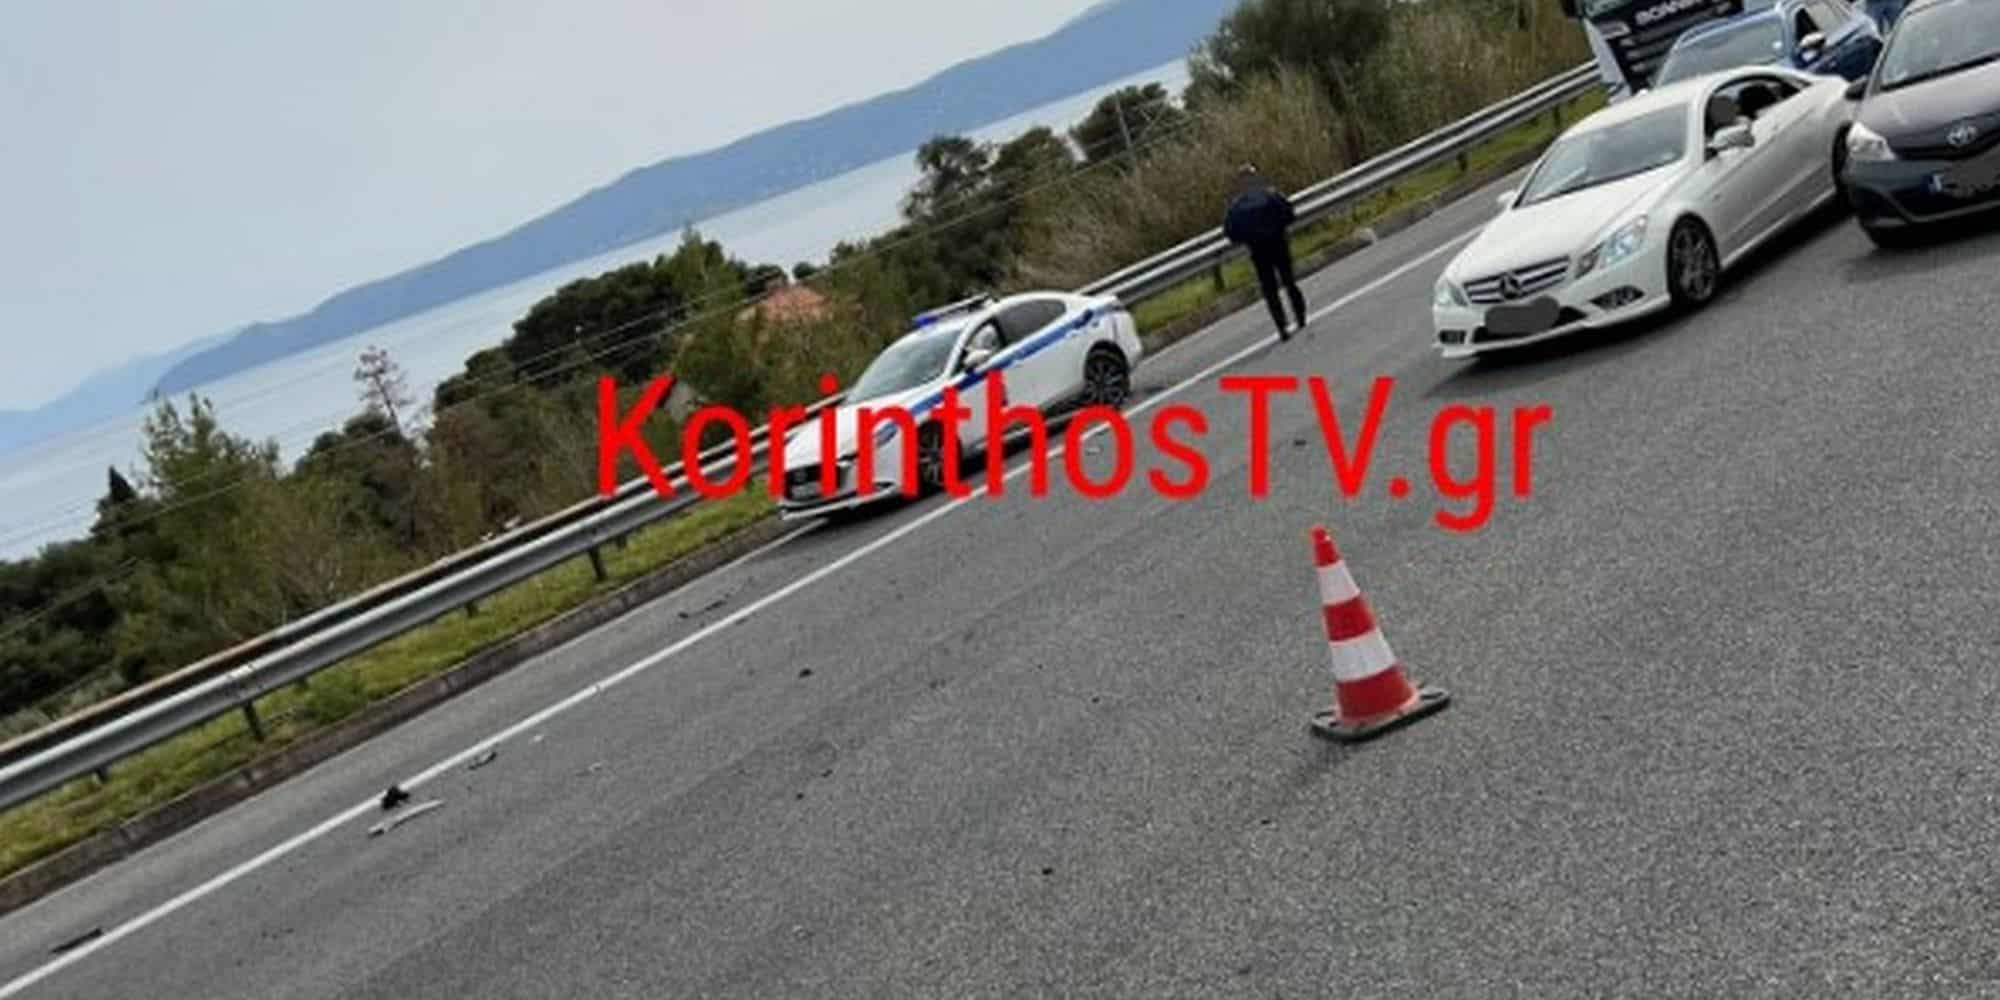 korinthos troxaio kentriki 24 10 - Σοβαρό τροχαίο με 2 νεκρούς στην Εθνική Οδό Αθηνών-Κορίνθου, γυναίκα οδηγός μπήκε ανάποδα και σκότωσε μοτοσυκλετιστή (εικόνες)